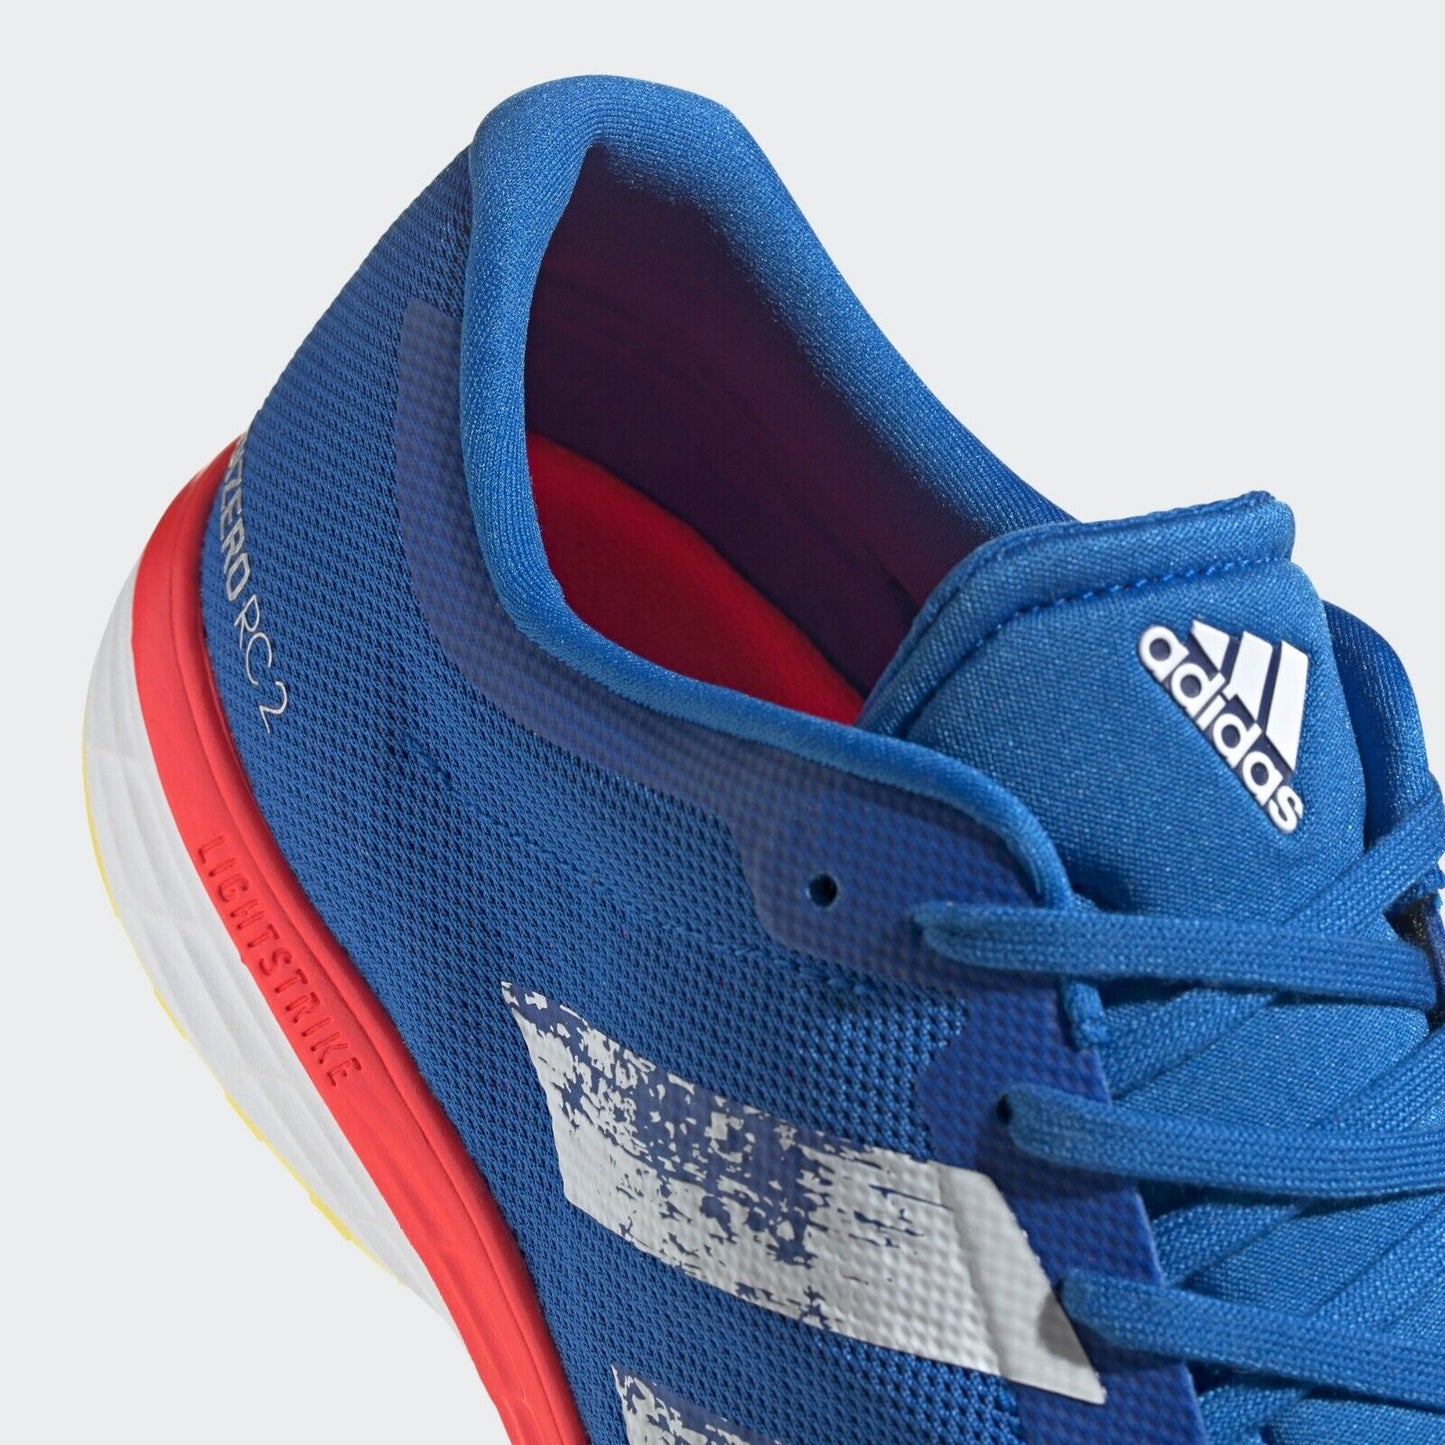 adidas Adizero RC 2 Mens Running Shoes - Glow Blue